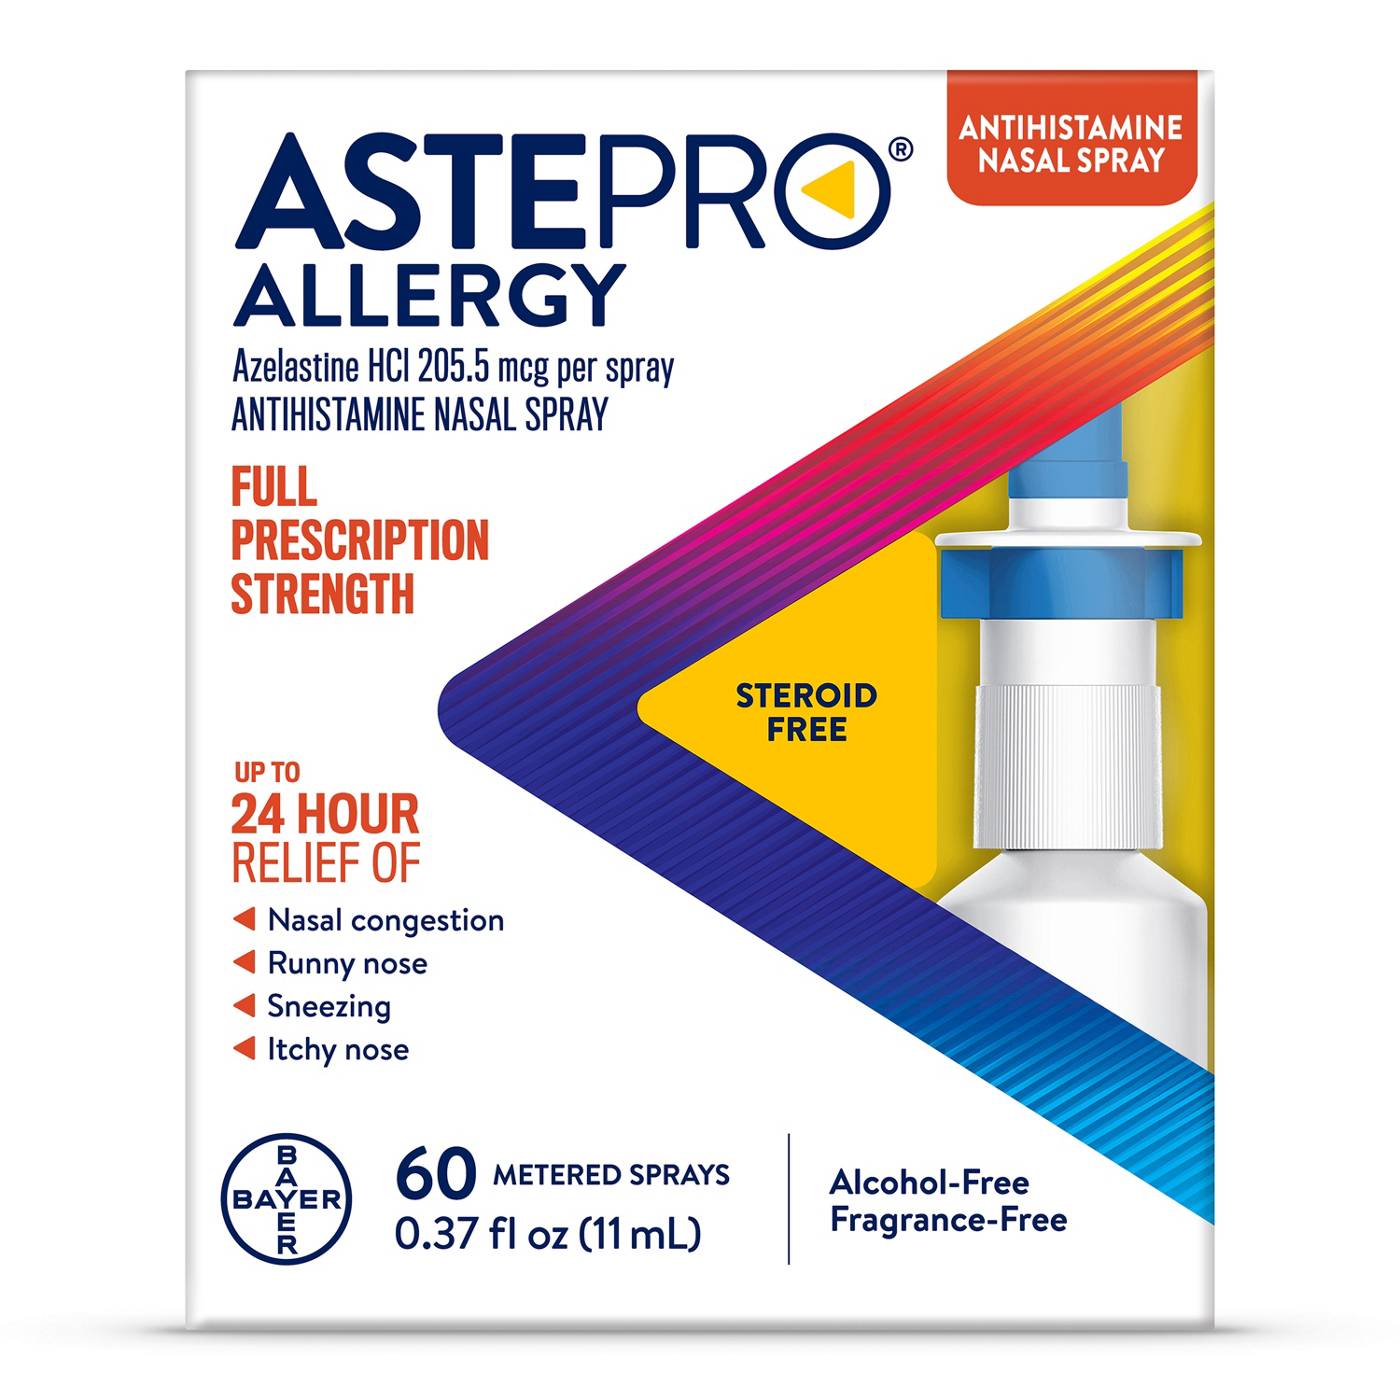 Astepro Allergy Steroid Free Antihistamine Nasal Spray; image 1 of 2